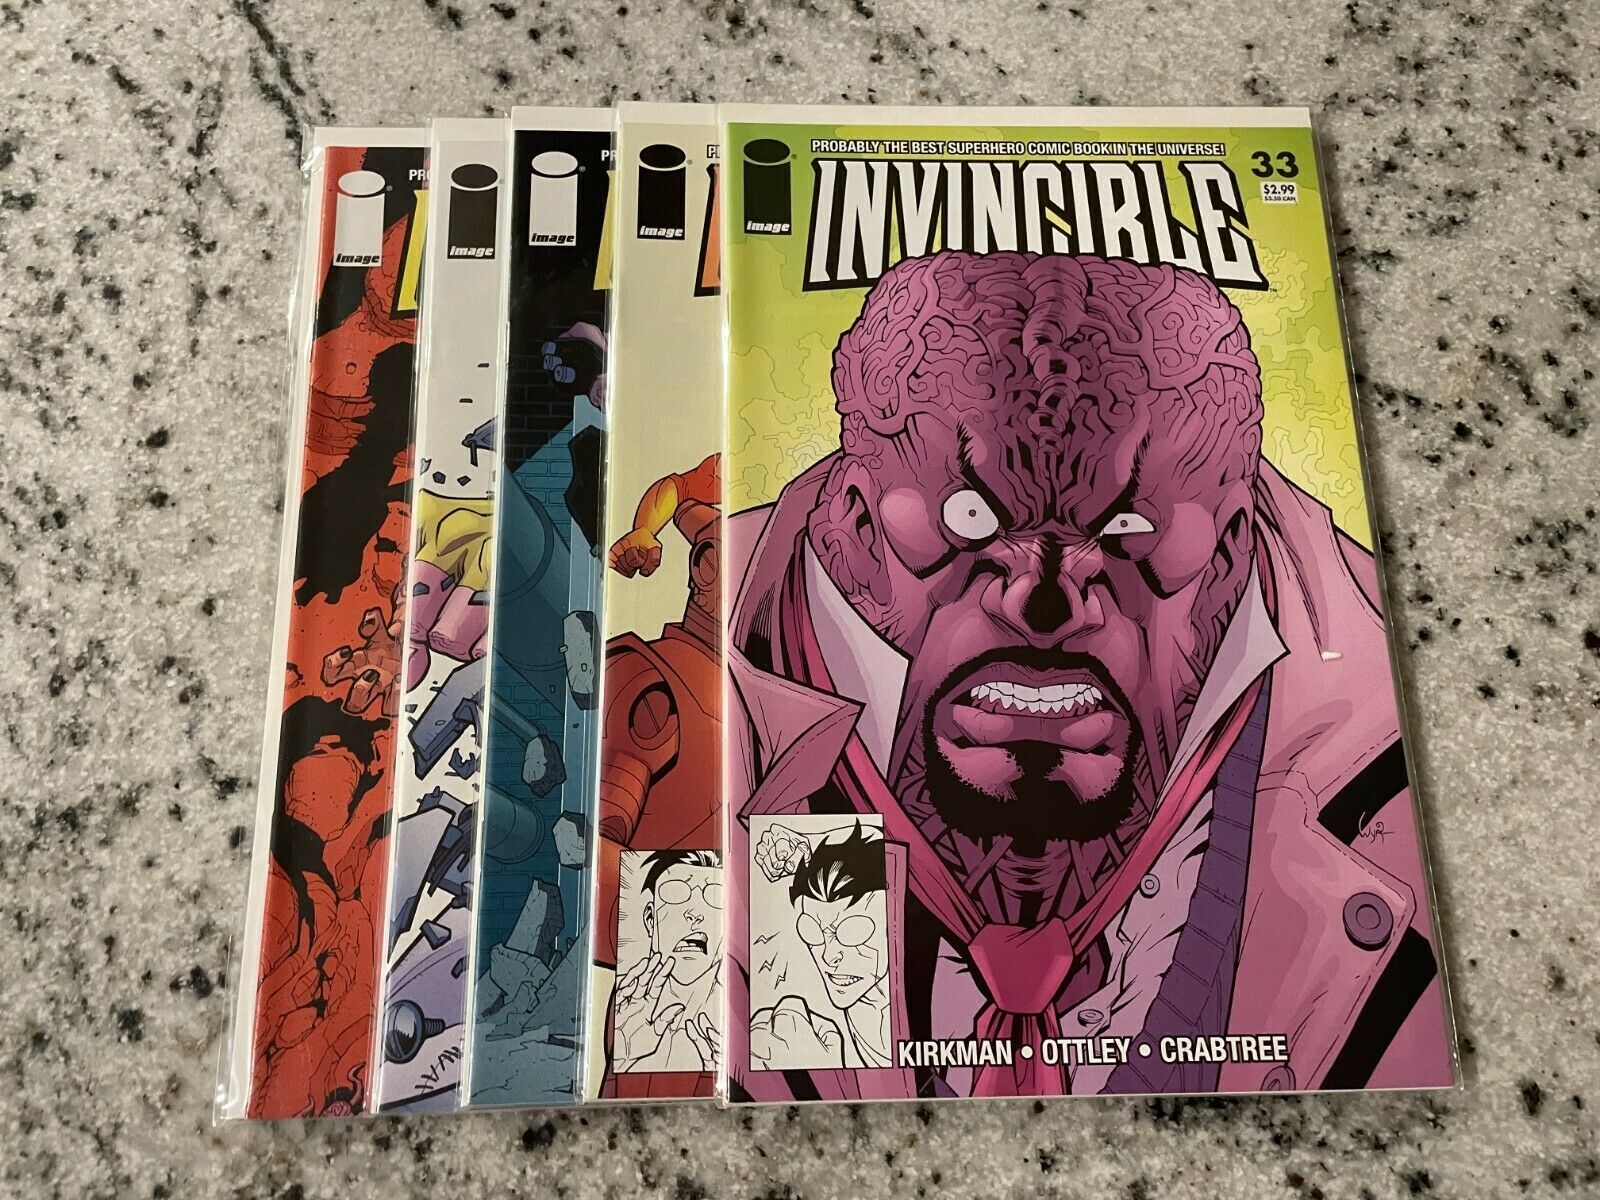 Invincible #35 - Image Comics (8.5 OB) 2006  Comic Books - Modern Age,  Image Comics, Invincible, Superhero / HipComic